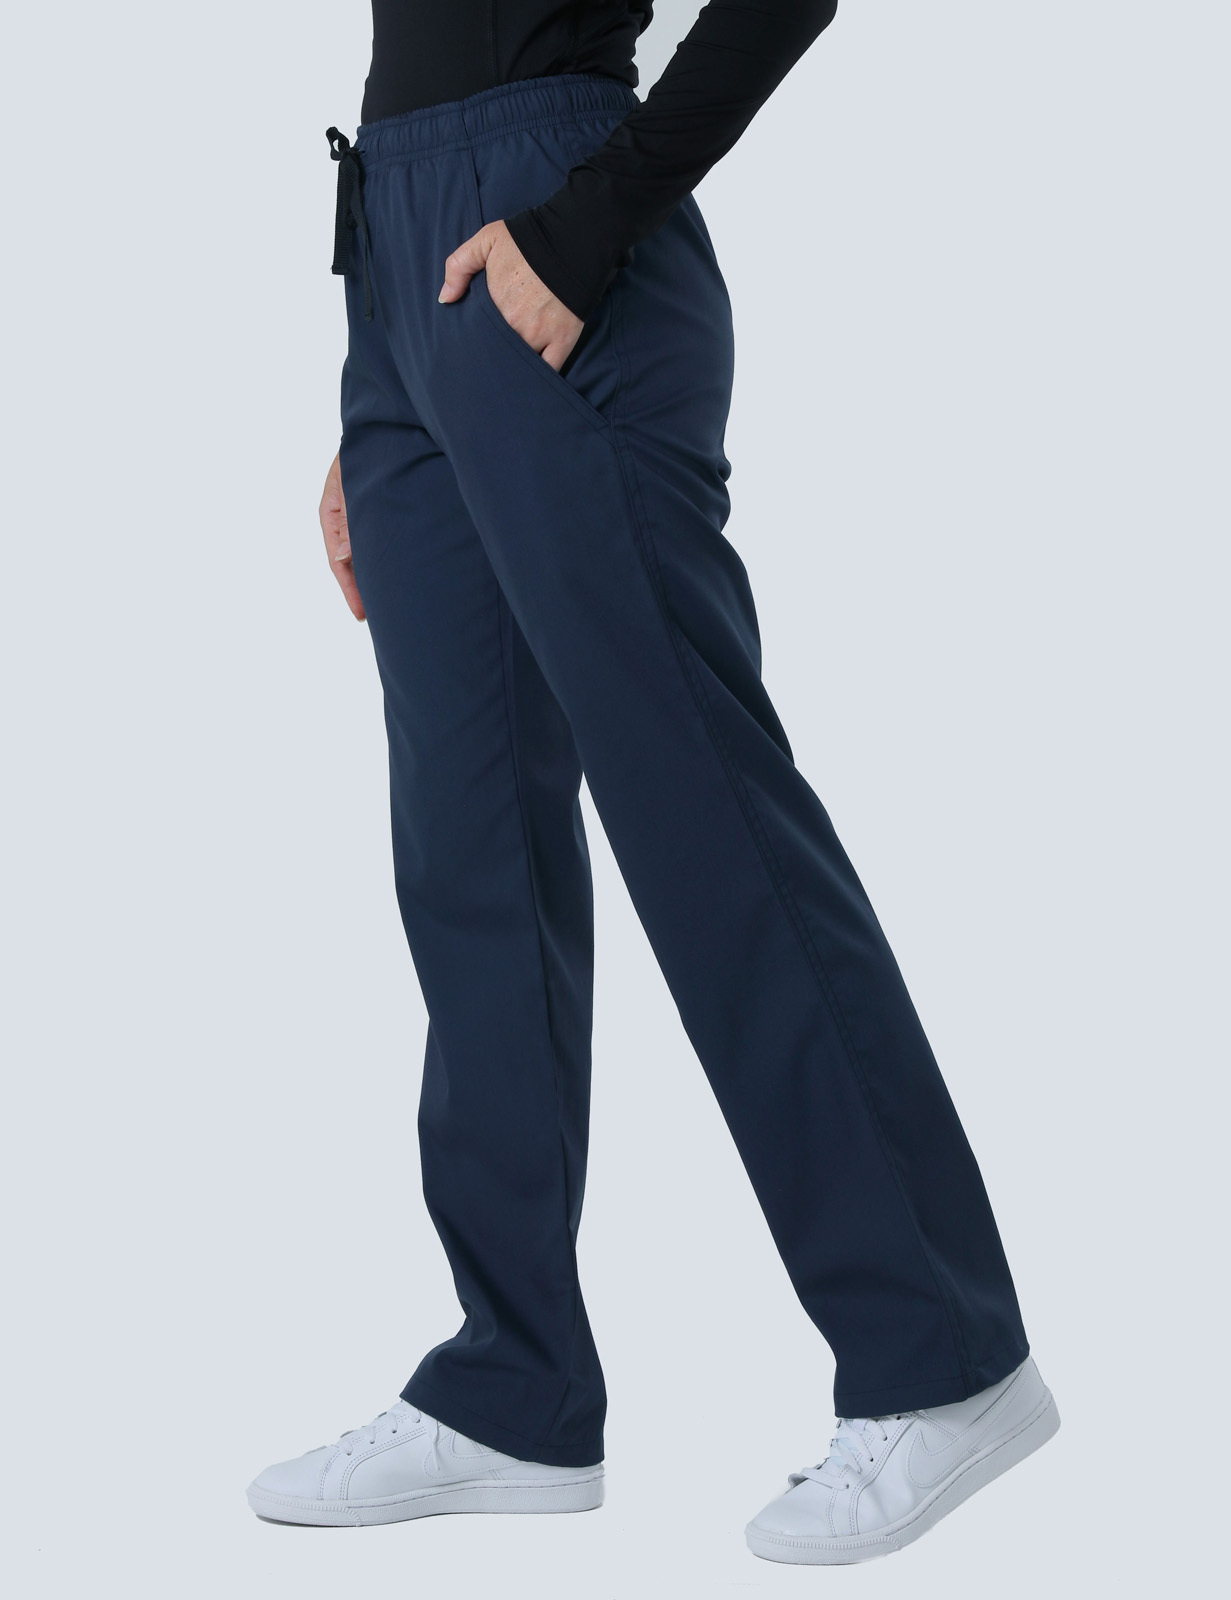 Ipswich Hospital Clinical Measurements Uniform Set Bundle (Women's Fit Spandex and Regular Pants in Navy incl Logos)